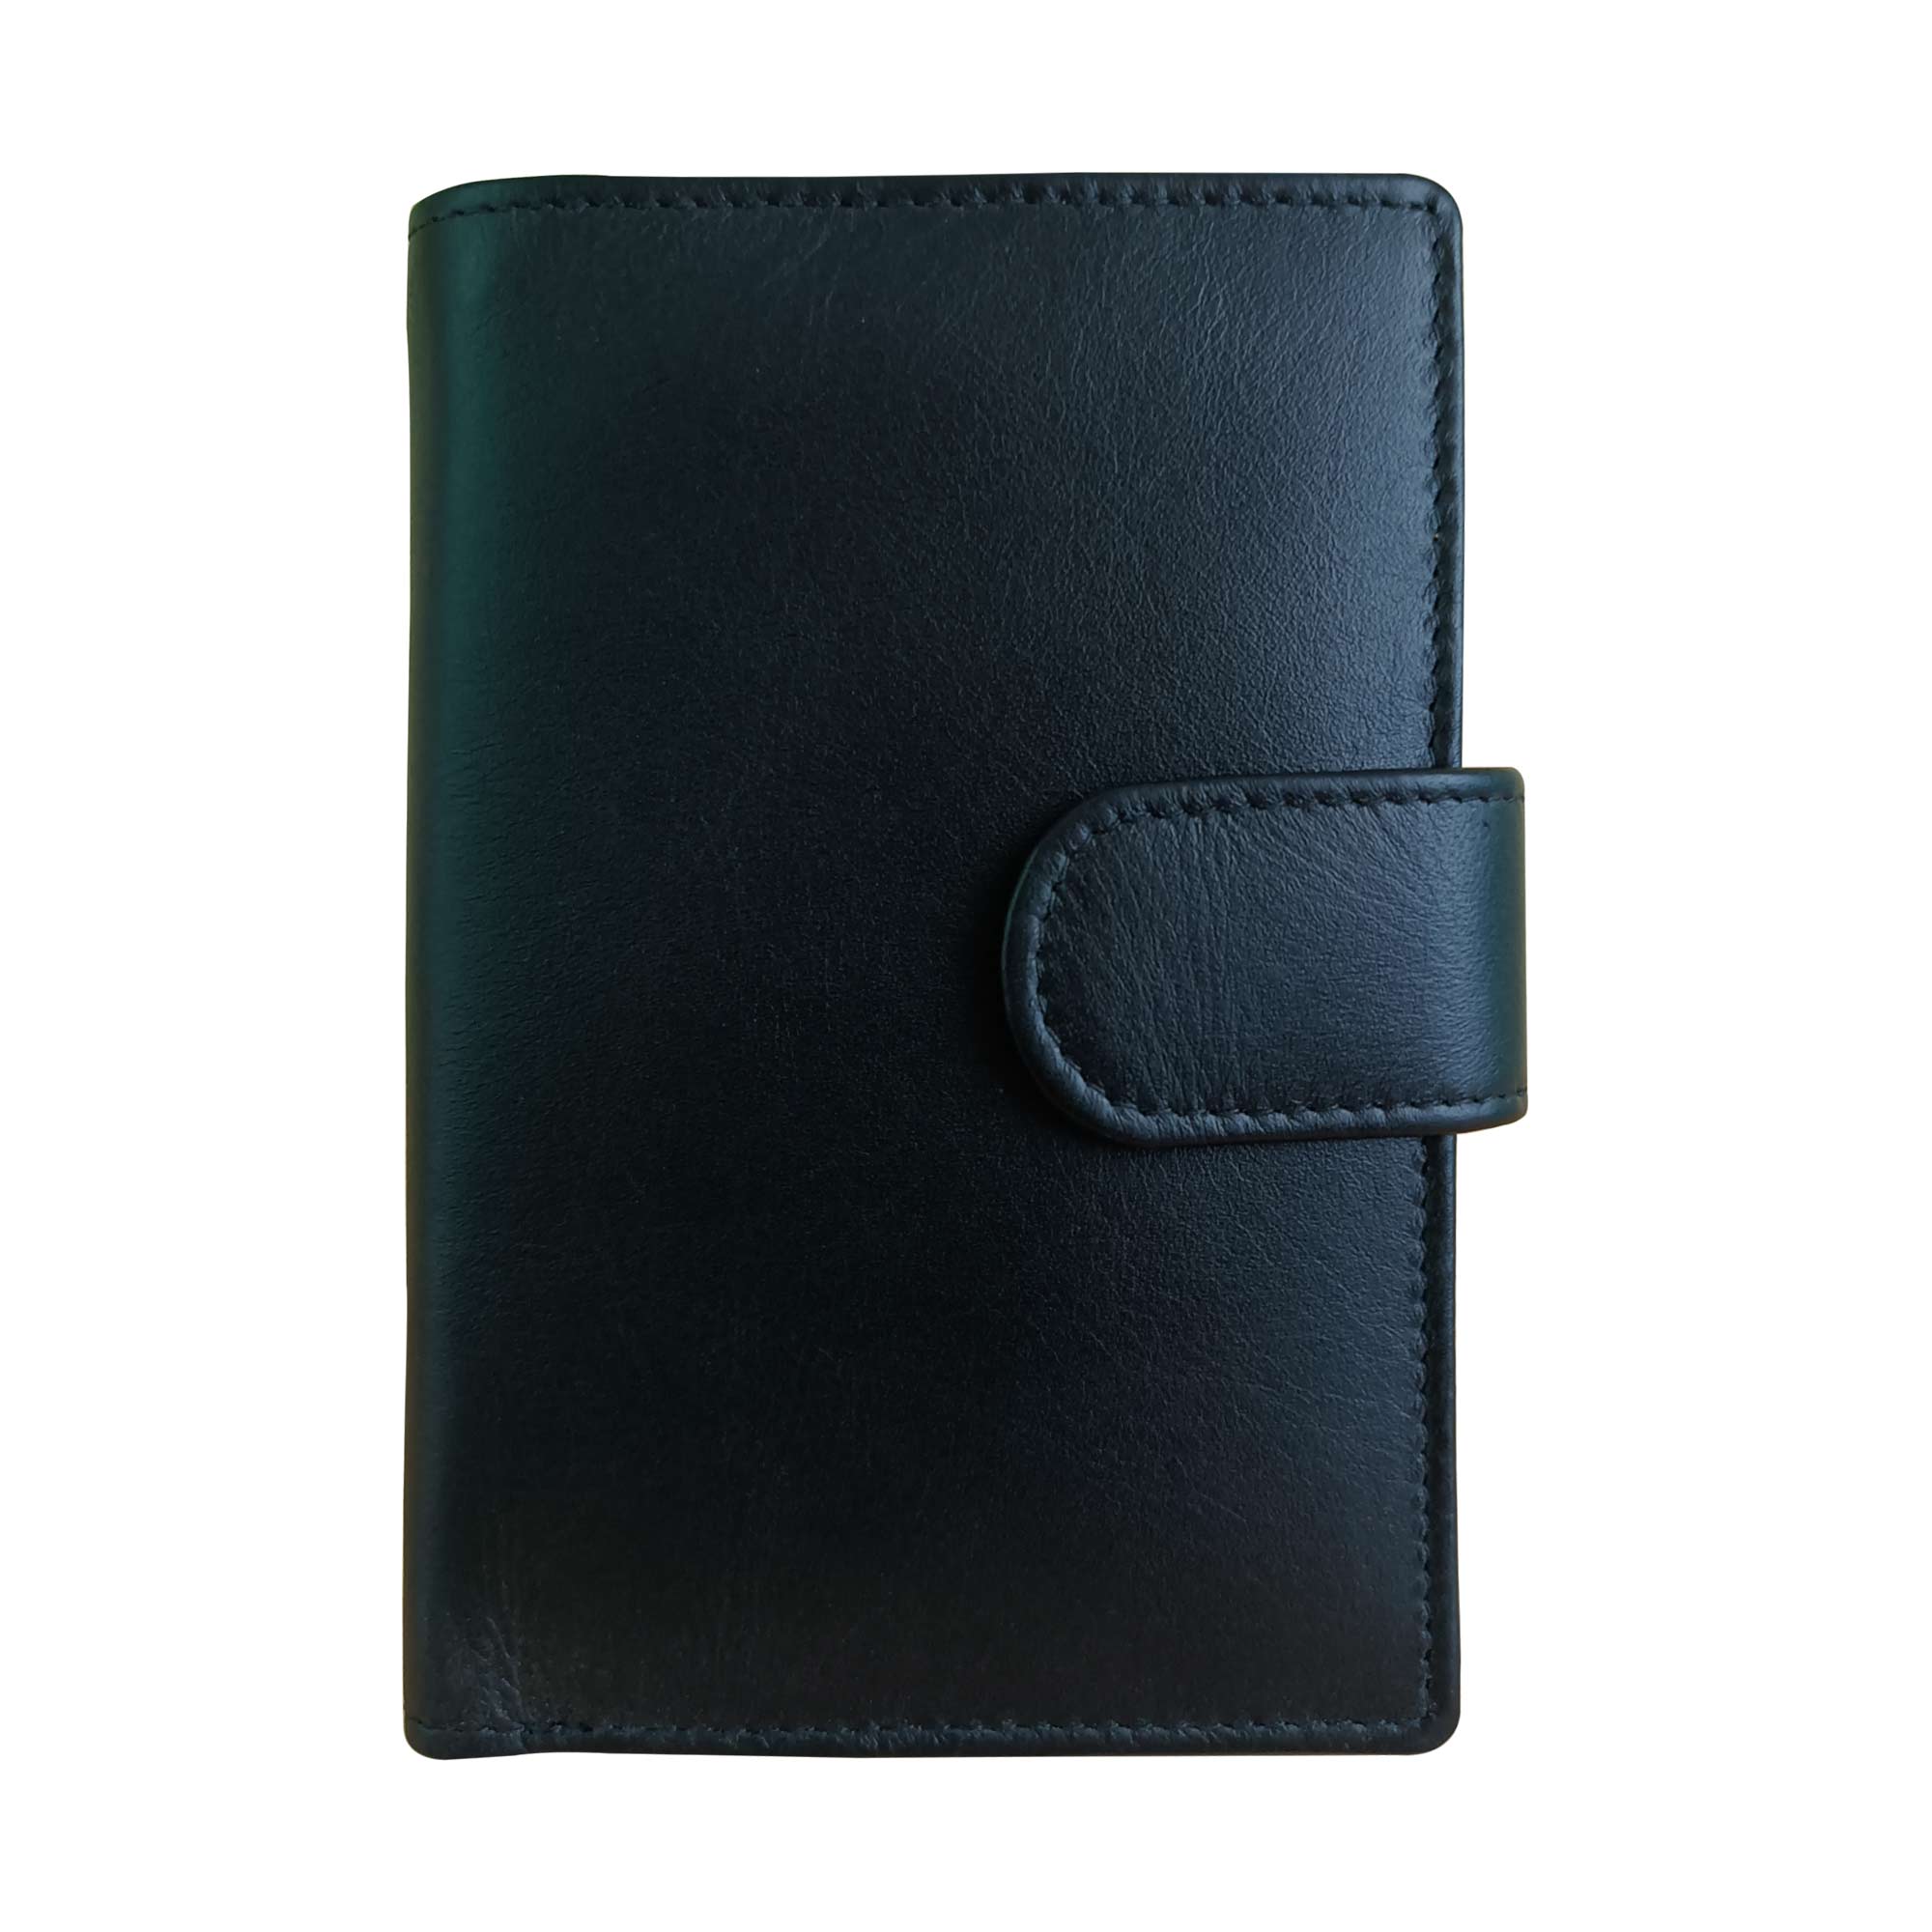 Multipurpose Leather Wallet - Black Color